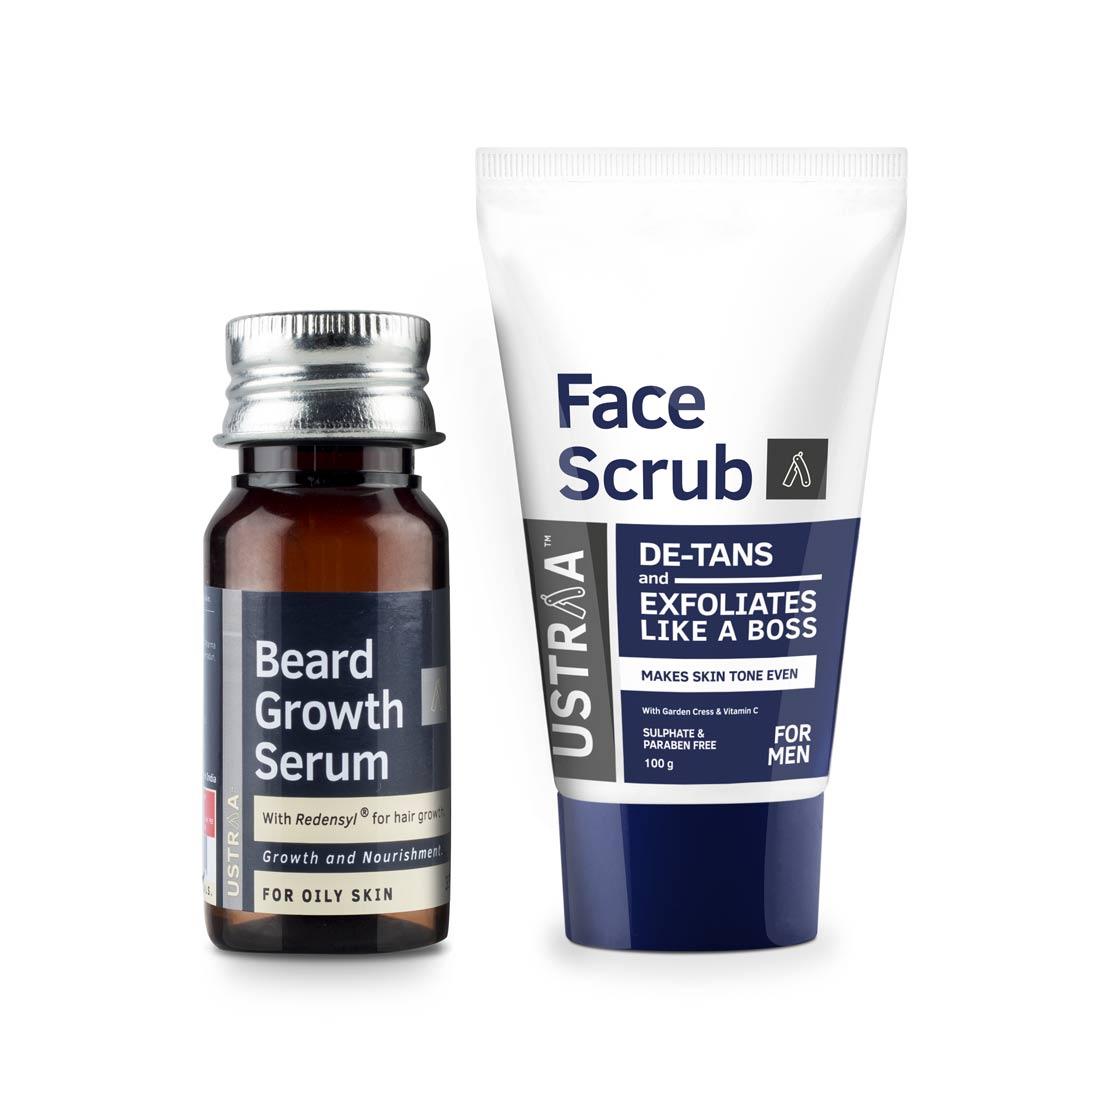 Beard Growth Serum & Face Scrub- De tan